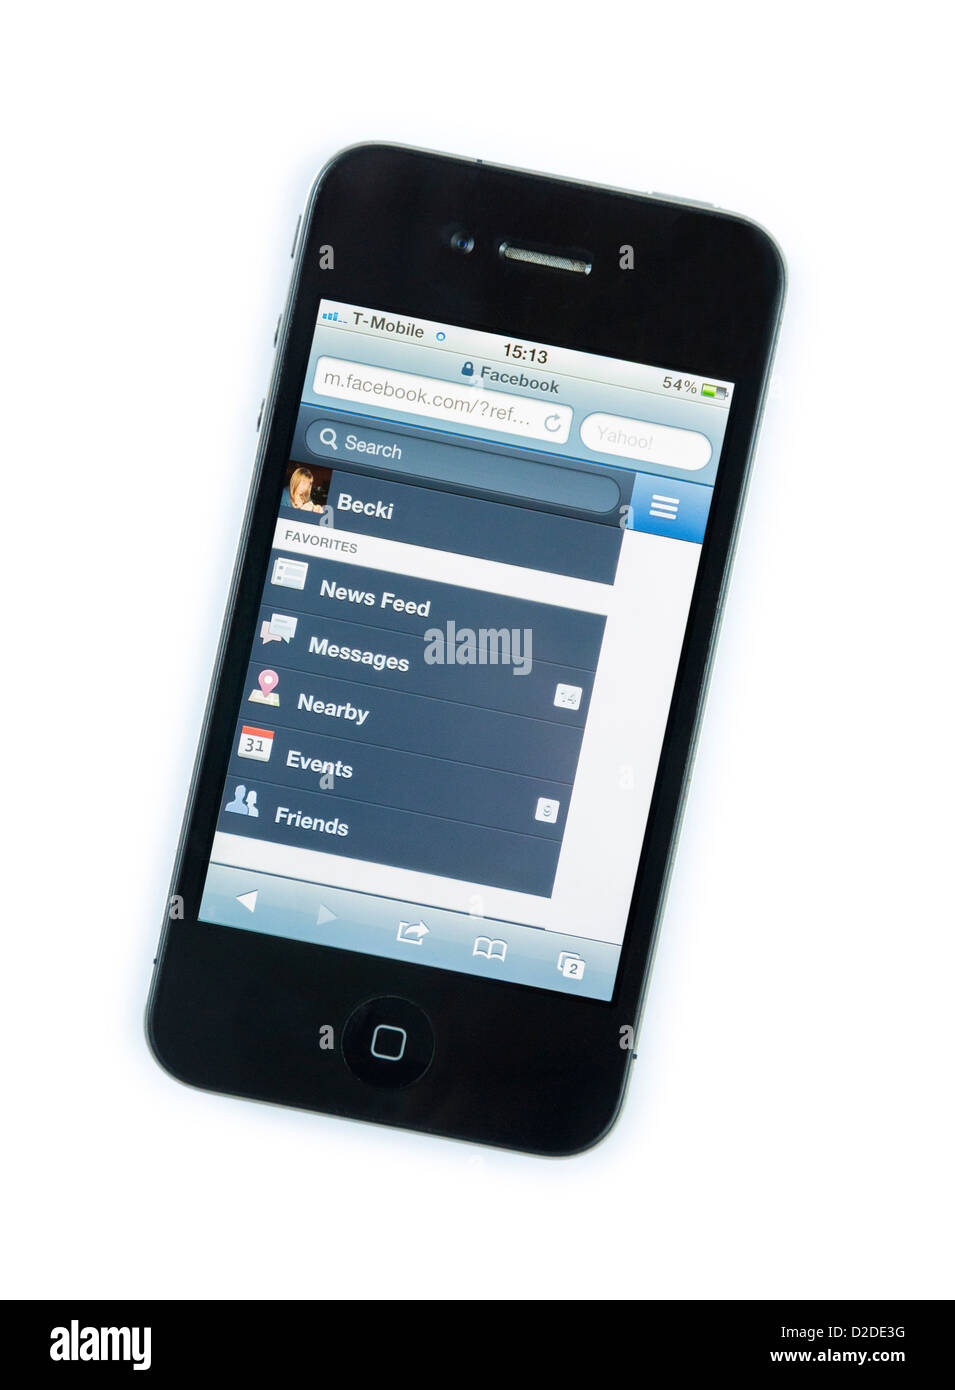 message menu on iPhone Stock Photo